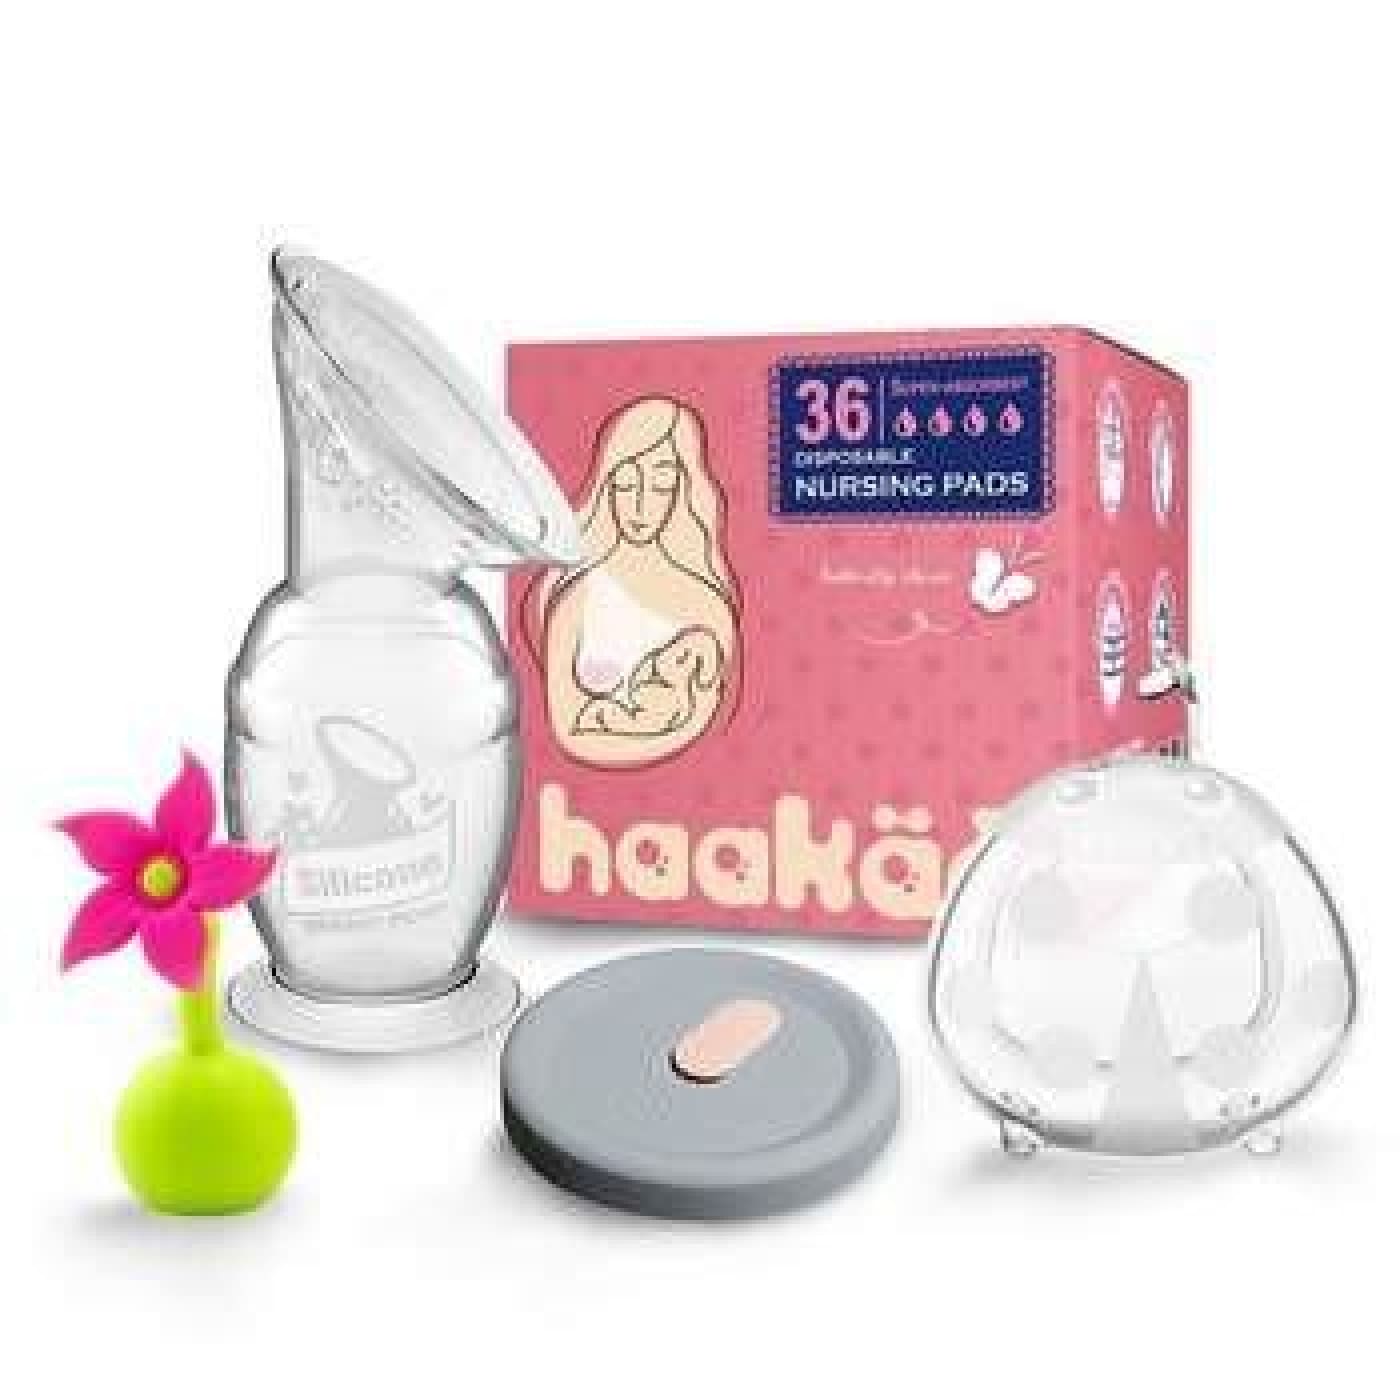 Haakaa New Mum Breastfeeding Essentials Pack - Limited Edition - NURSING & FEEDING - BREAST PUMPS/ACCESSORIES